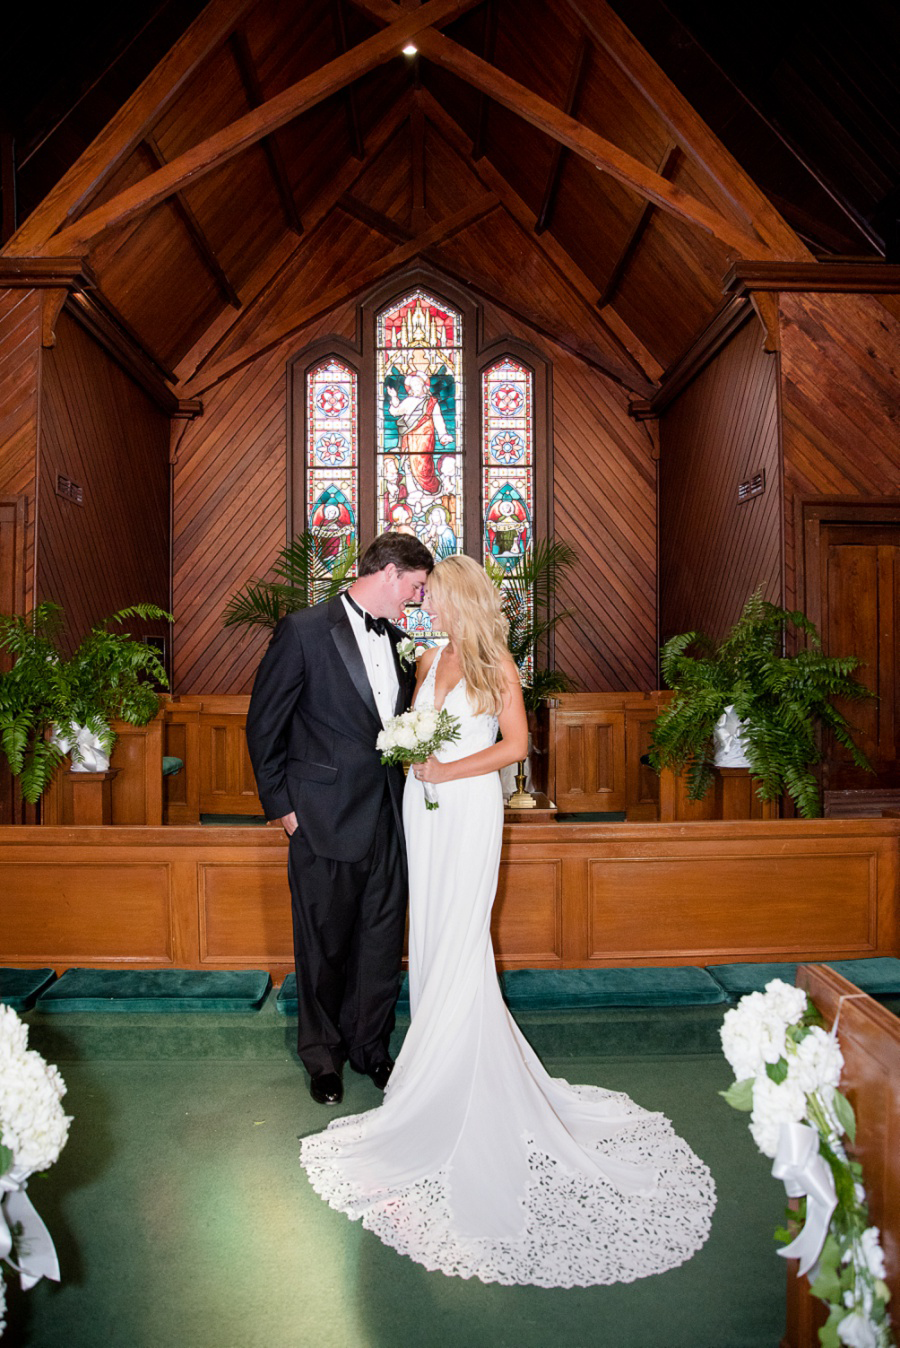 Lovely Lane Chapel Wedding by Tamara Gibson Photography | St. Simons Island Photographer | www.tamara-gibson.com